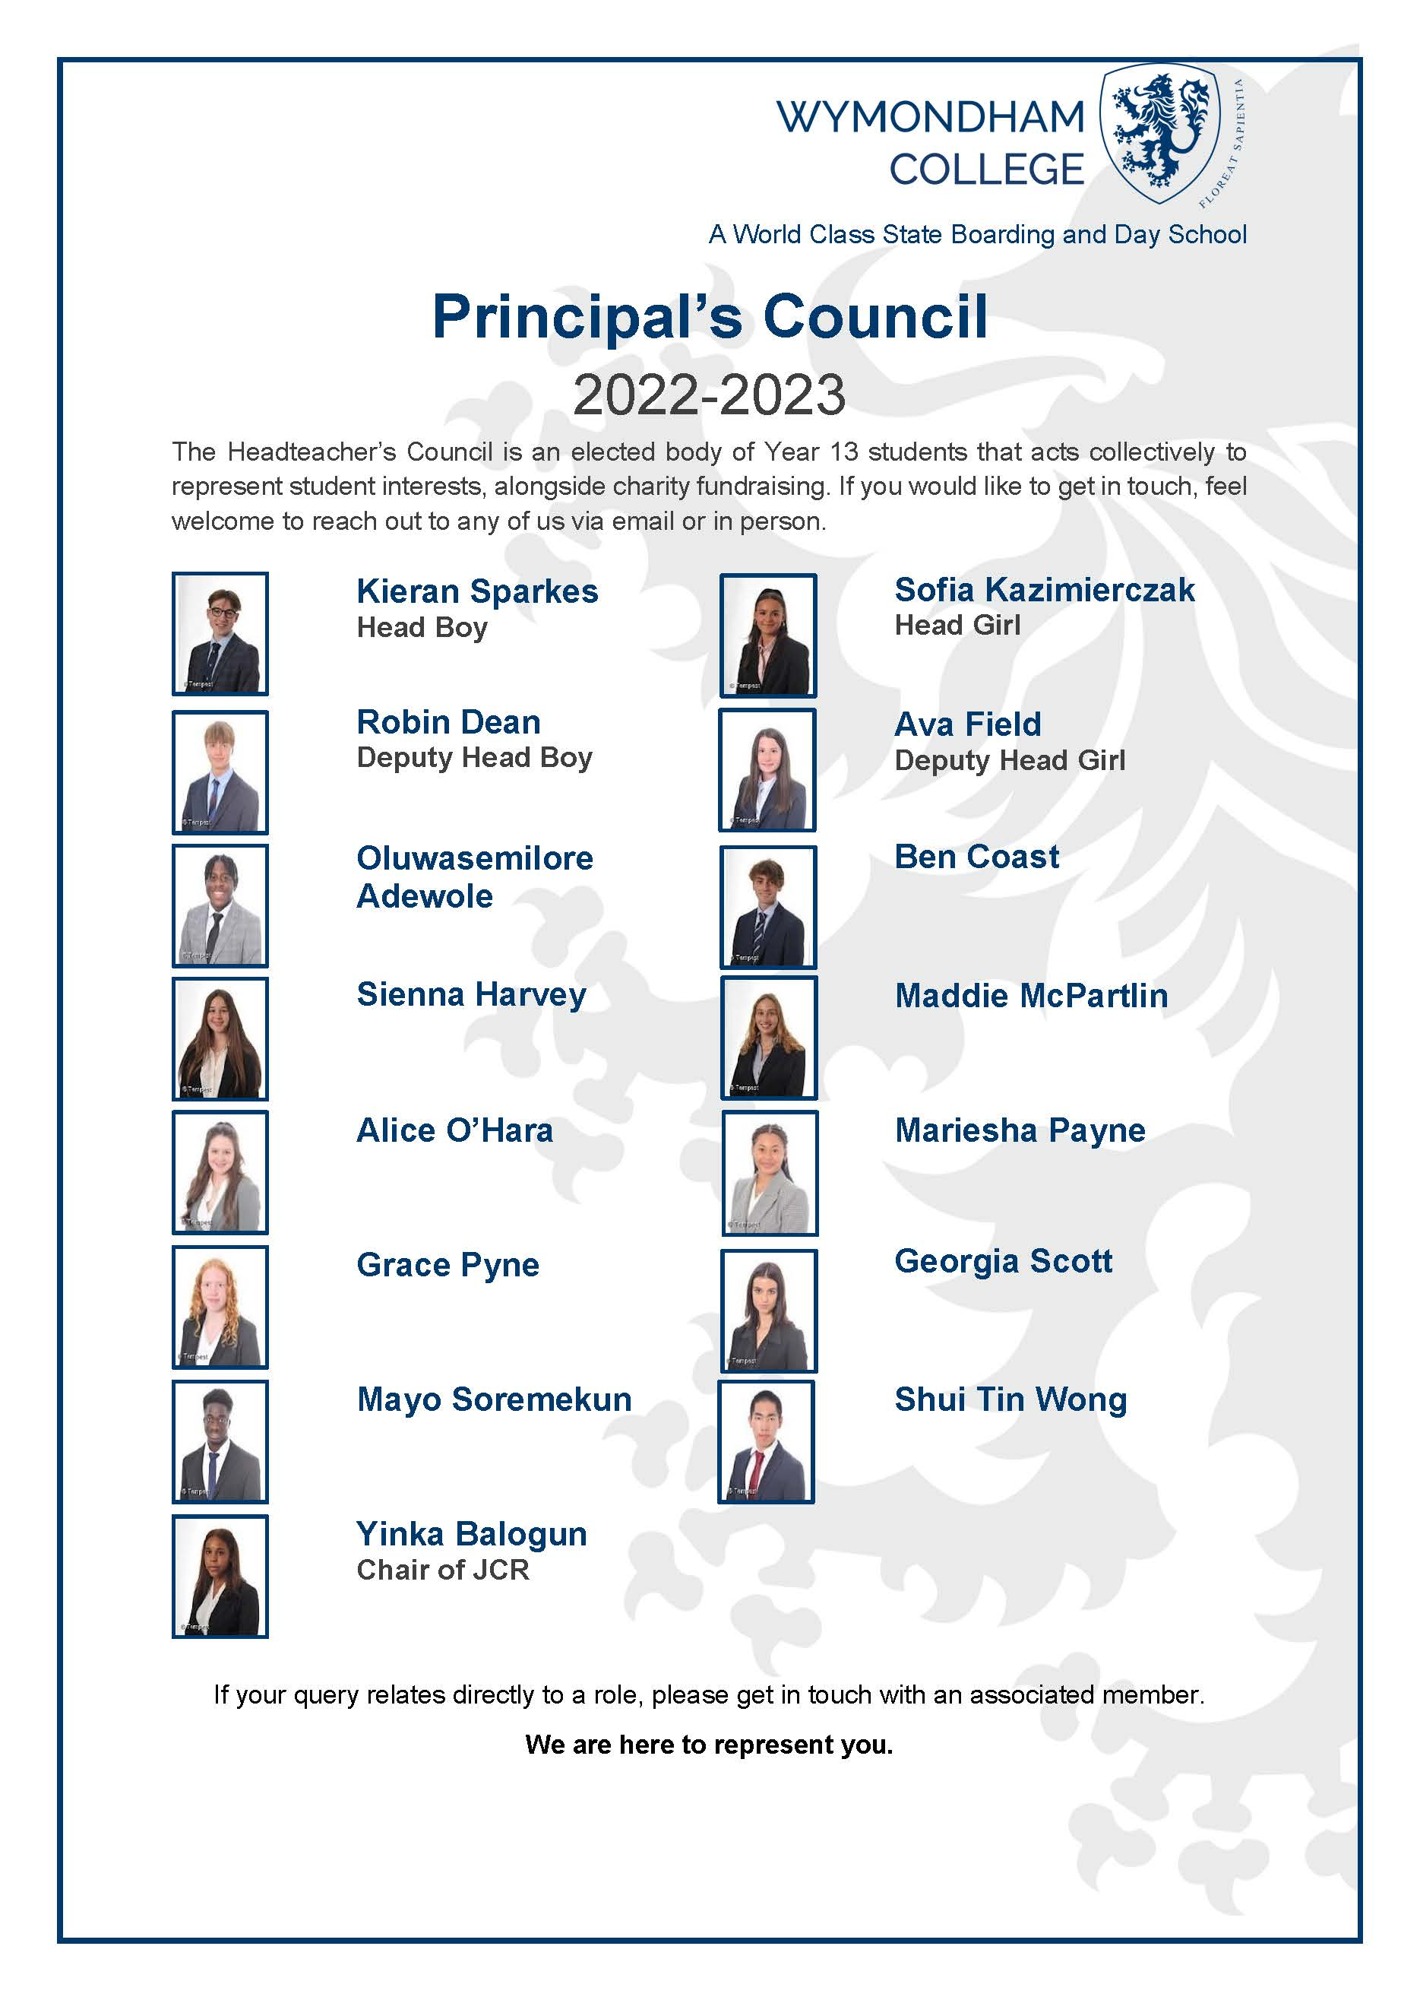 Principal's Council poster 2022   2023